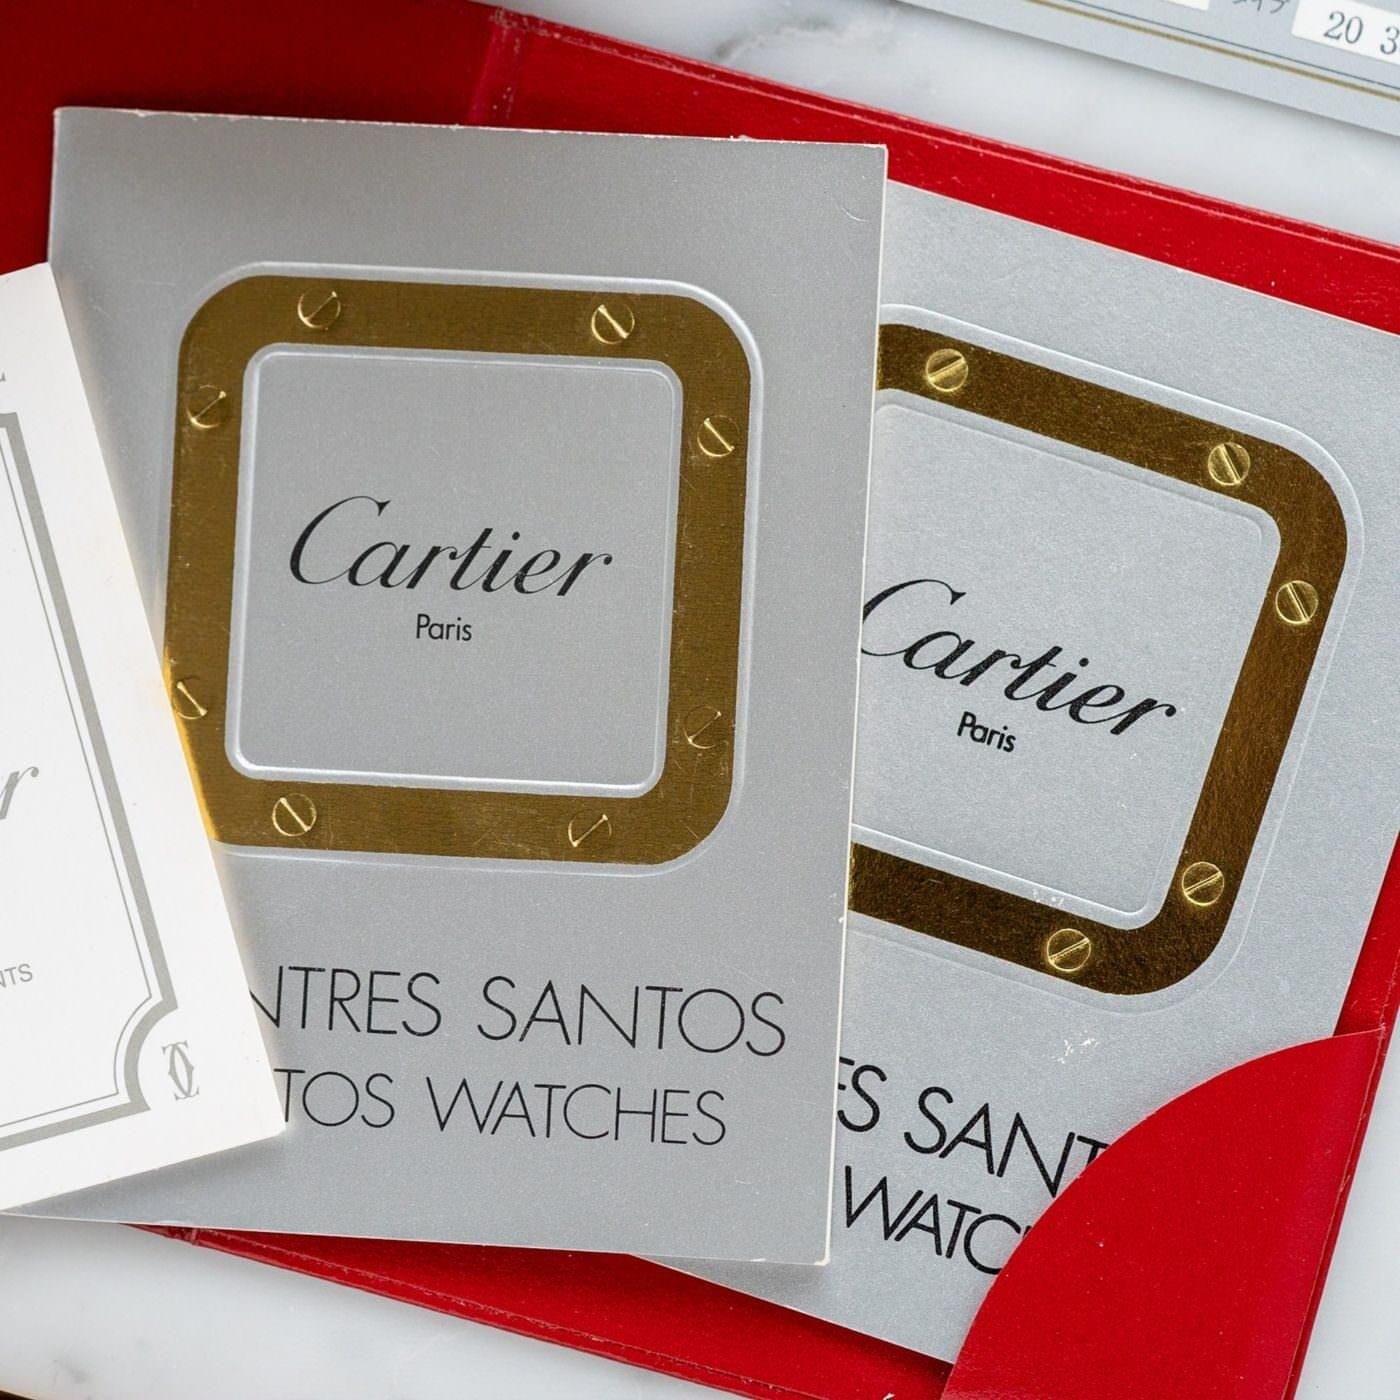 How to Use Cartier Watch (カルティエ時計の操作方法・説明書アーカイブ) - Arbitro